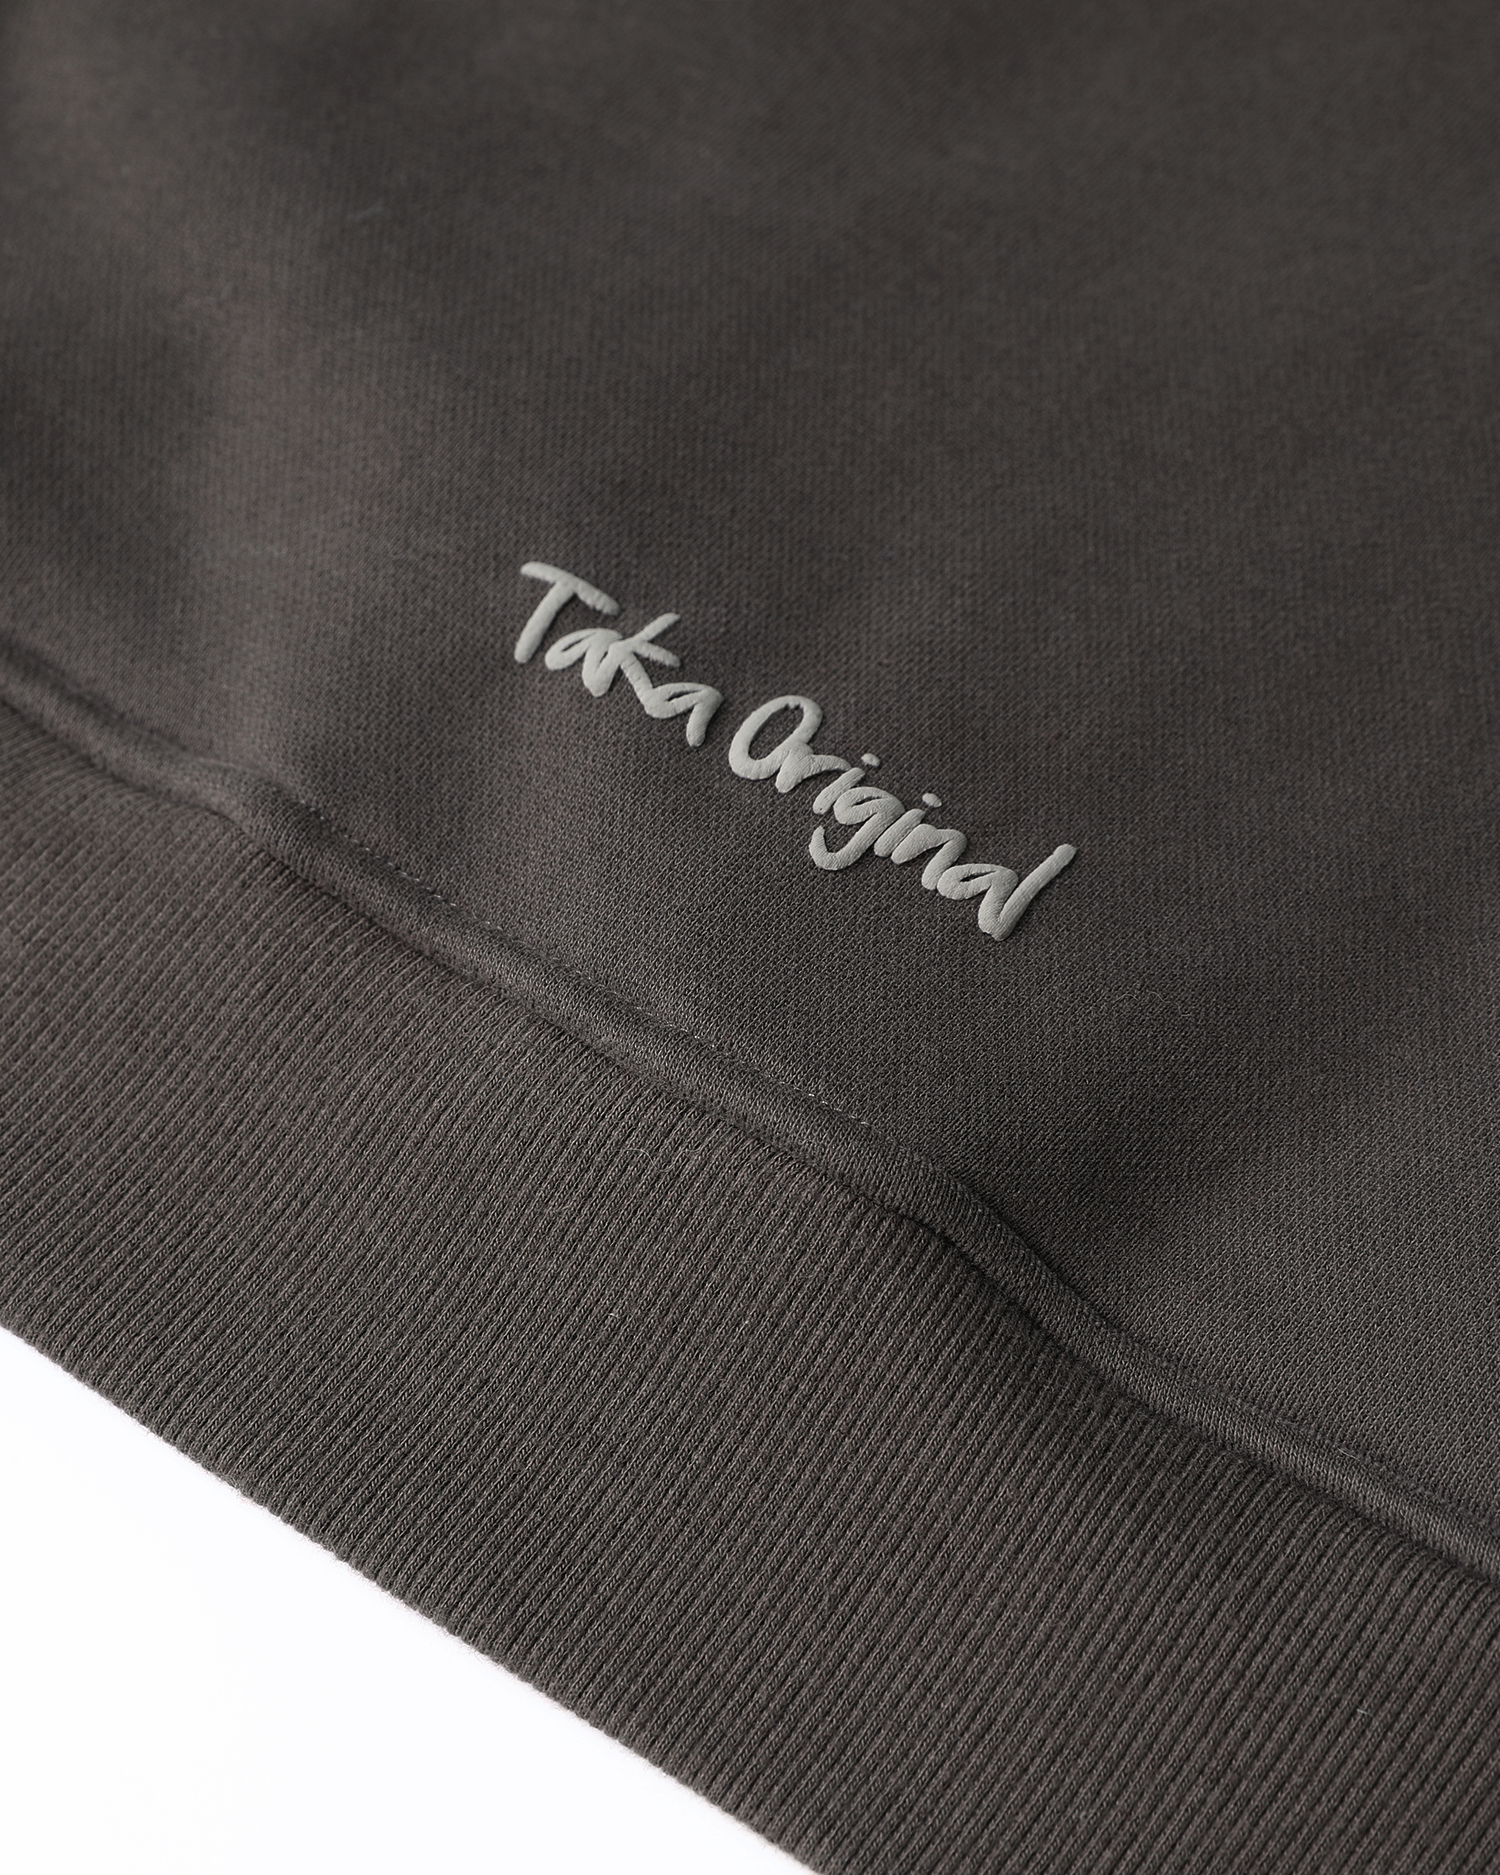 TAKA Original HOME collection big plan fleece hoodie dark grey